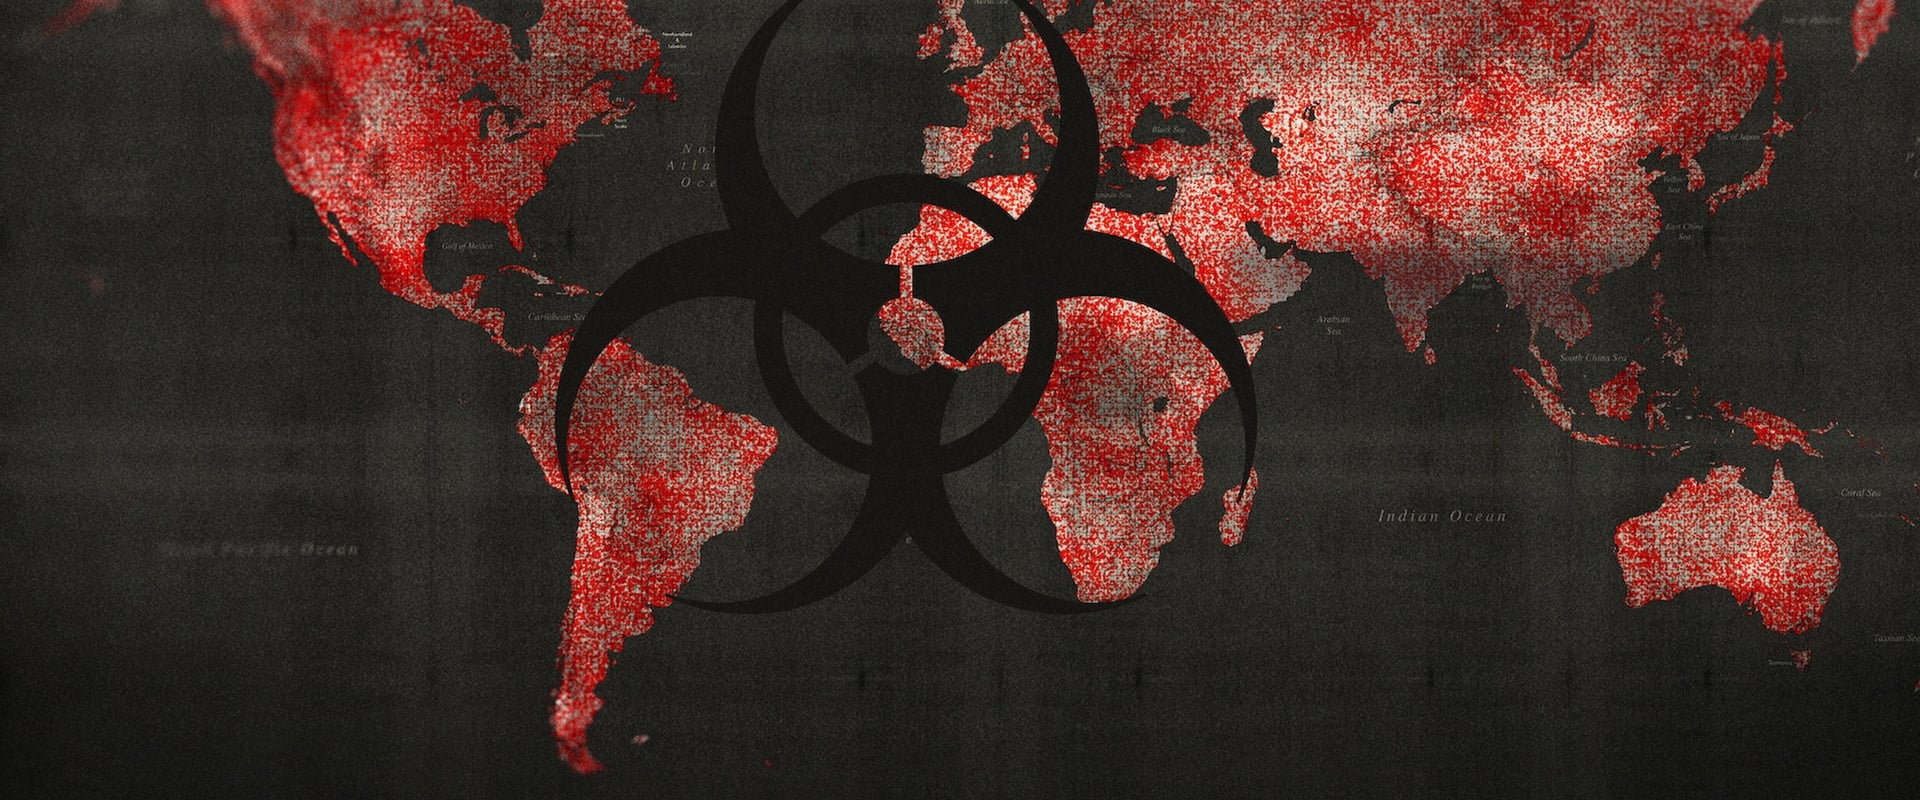 Pandemia globale